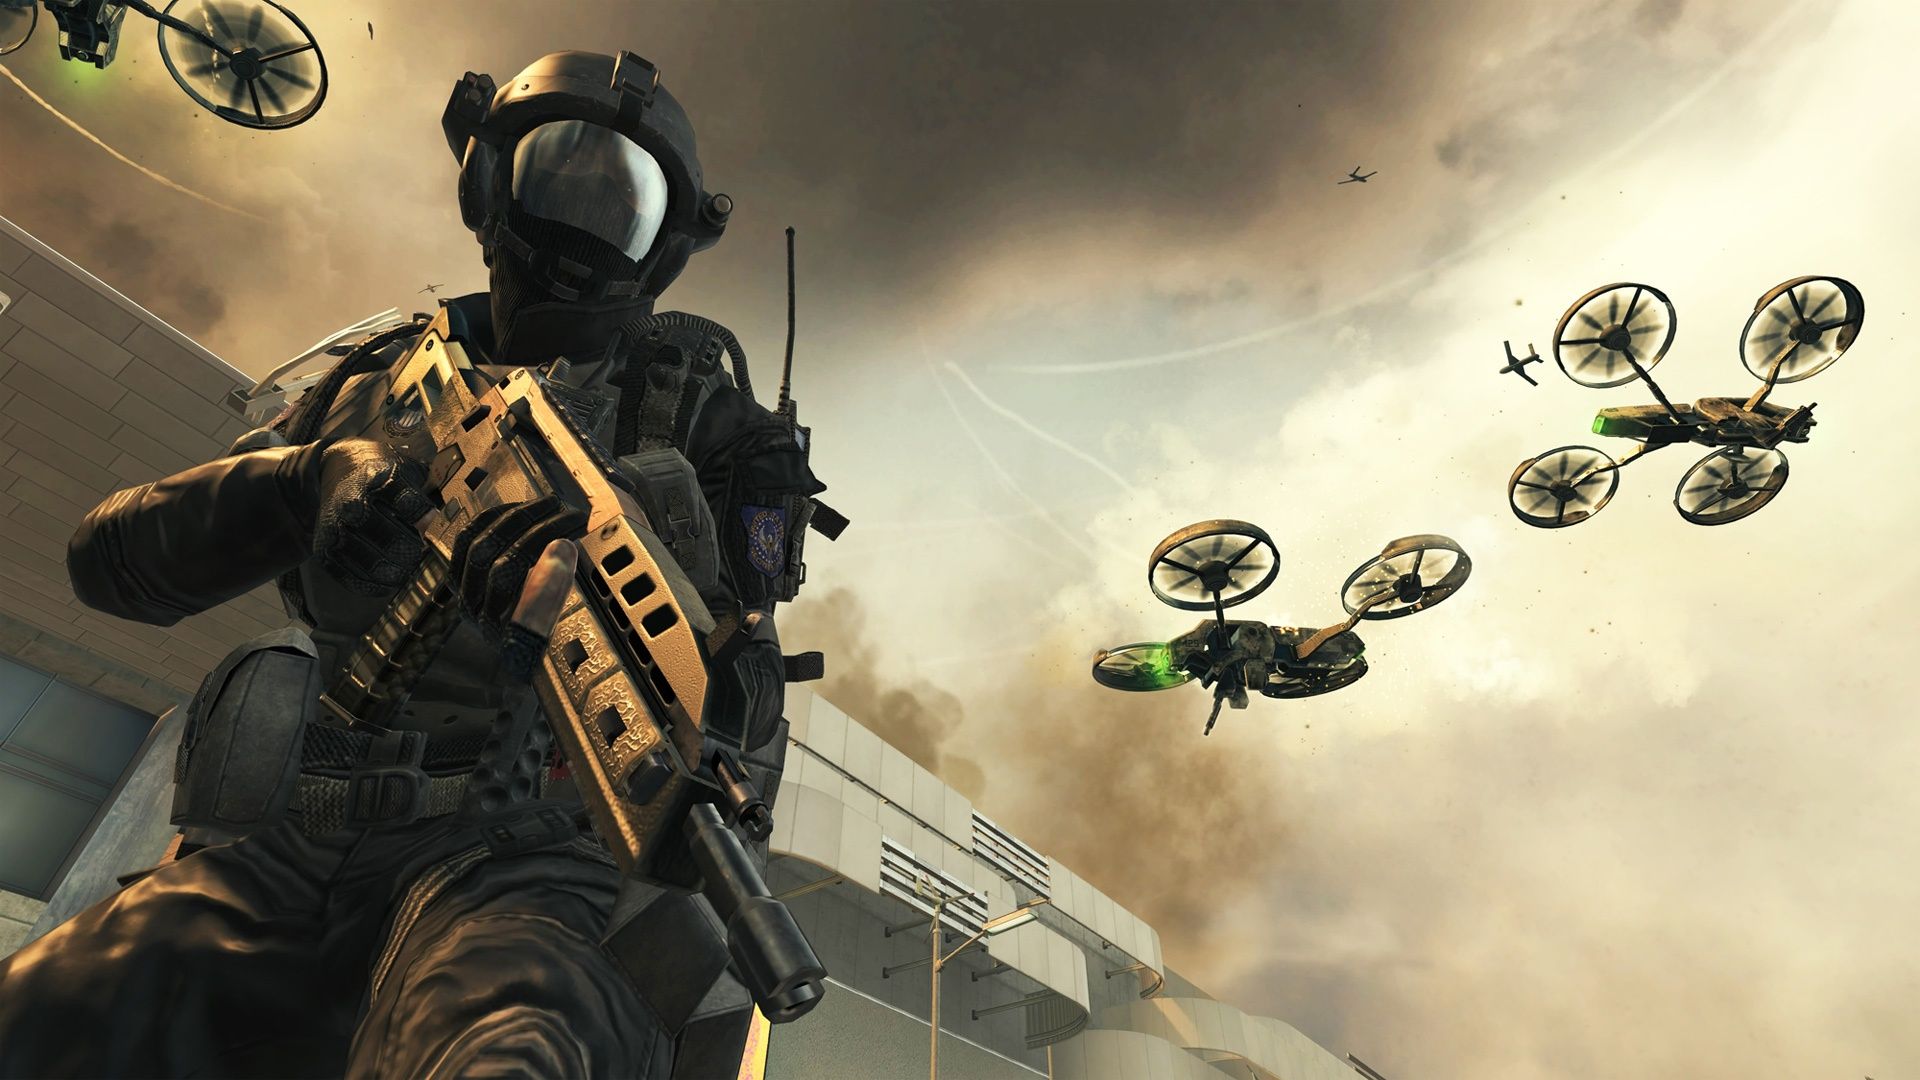 2012 Call of Duty: Black Ops 2 Wallpapers | HD Desktop Wallpaper ...